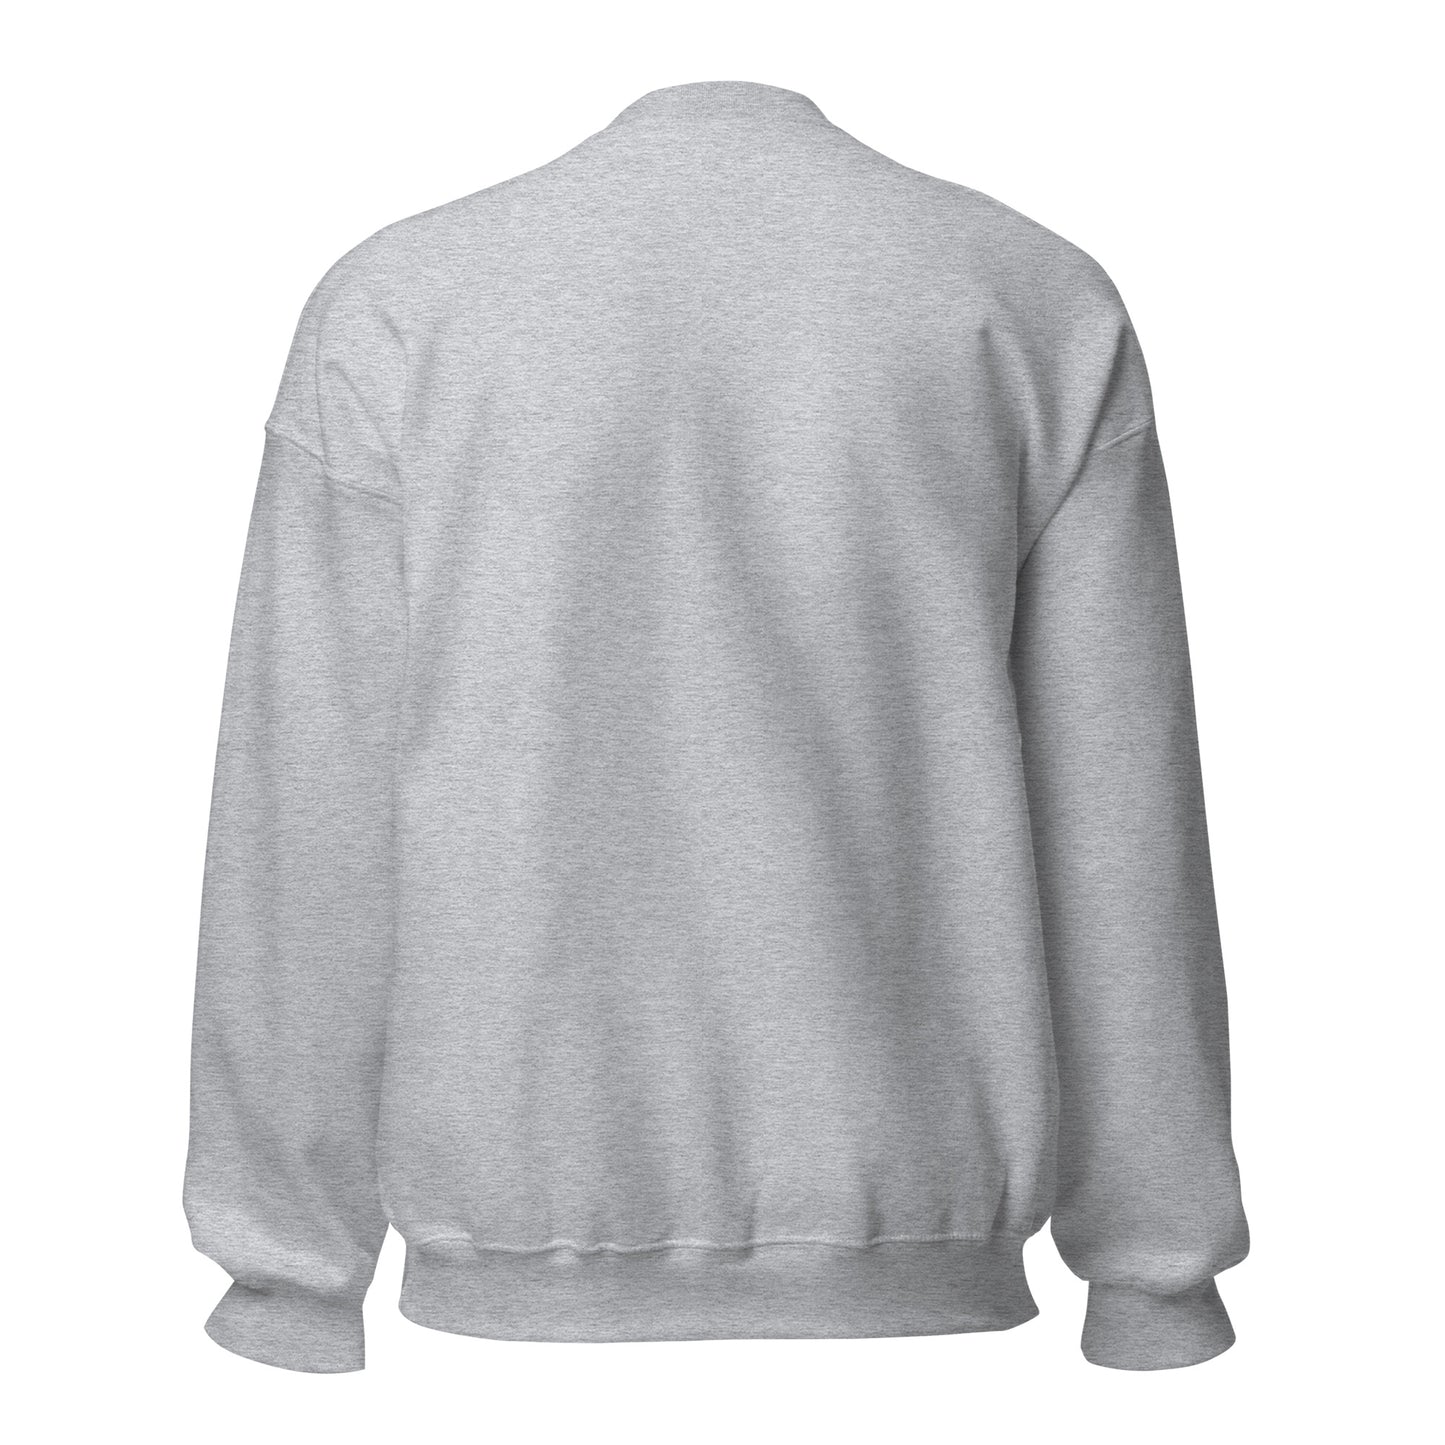 Unisex Embroidery Sweatshirt Worth